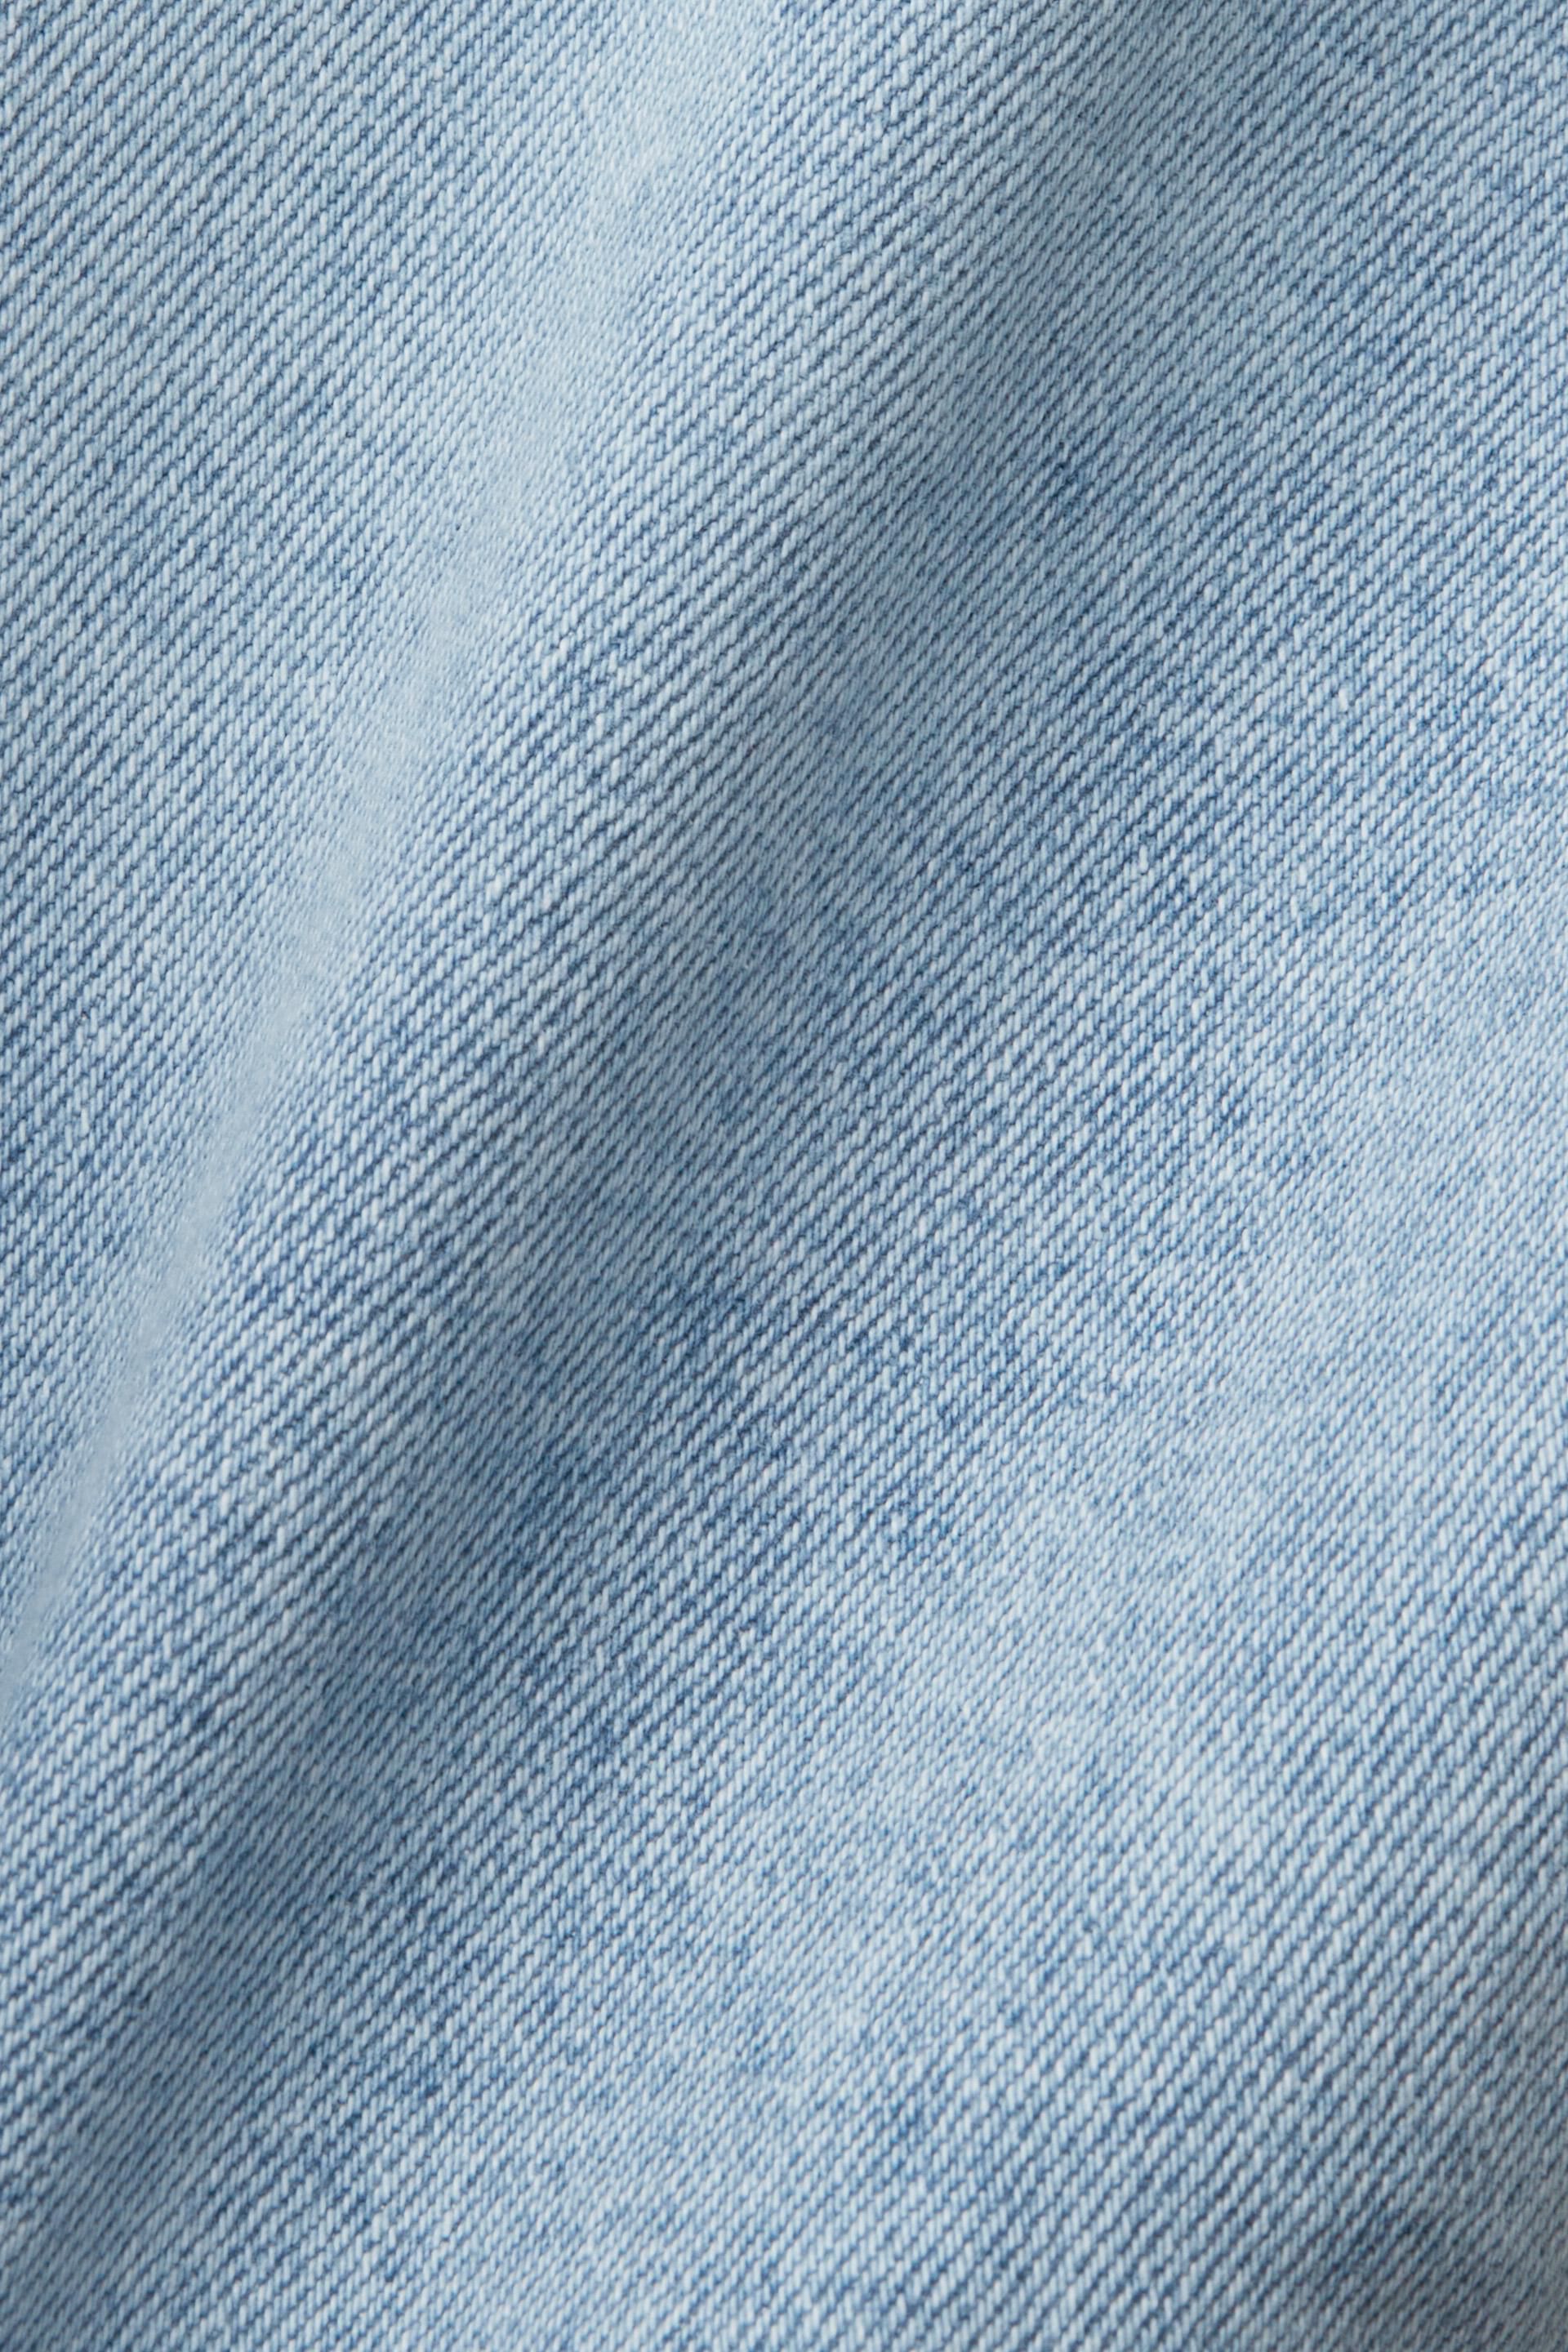 Denim Fabric Light Wash Blue Cotton for Slipcovers Apparel Upholstery -  Etsy | Denim fabric, Denim background, Light denim